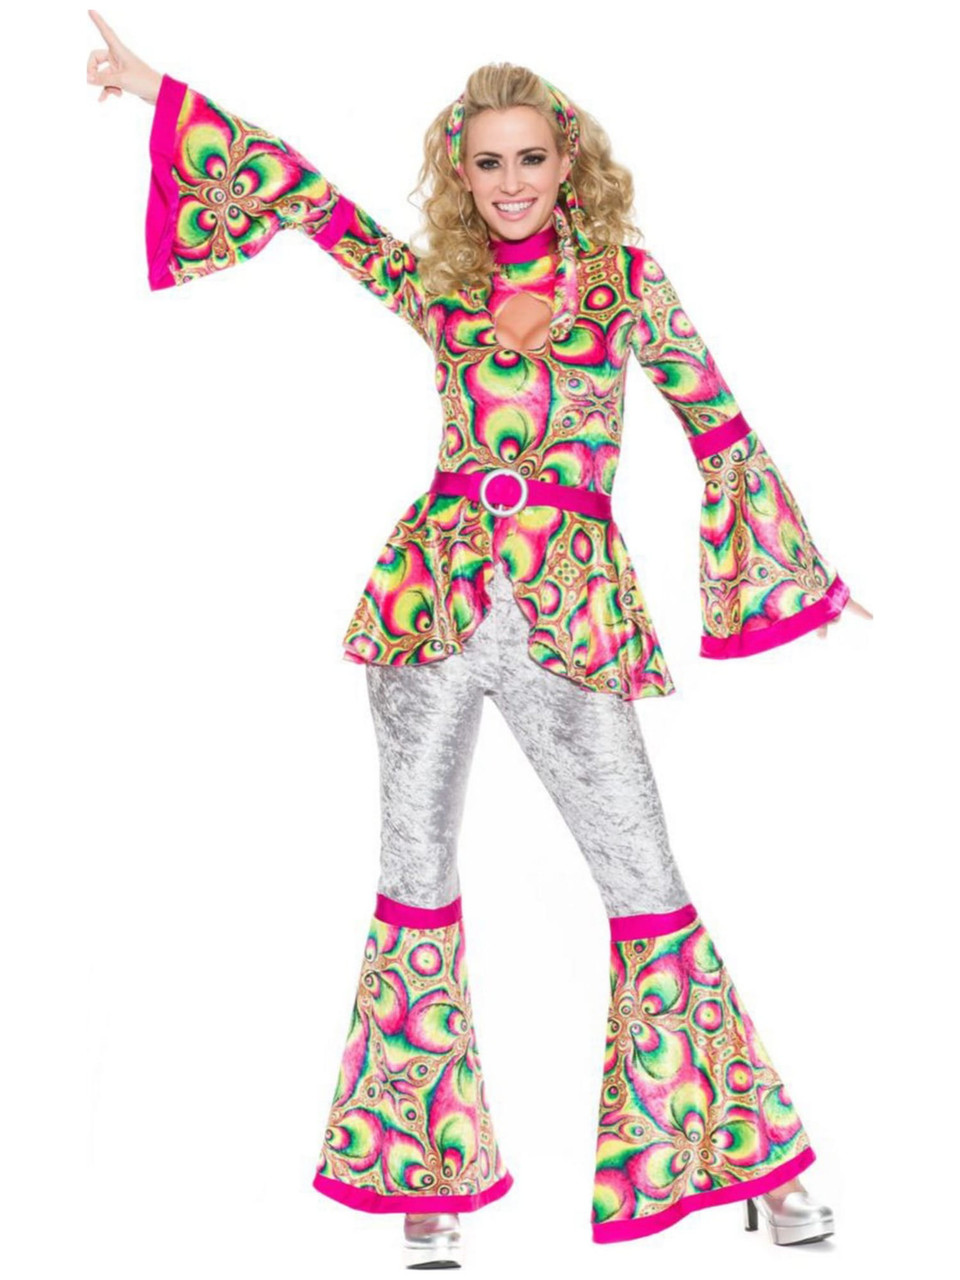 BELL BOTTOM PANTS Adult Womens 70s Disco Costume Fancy Dress